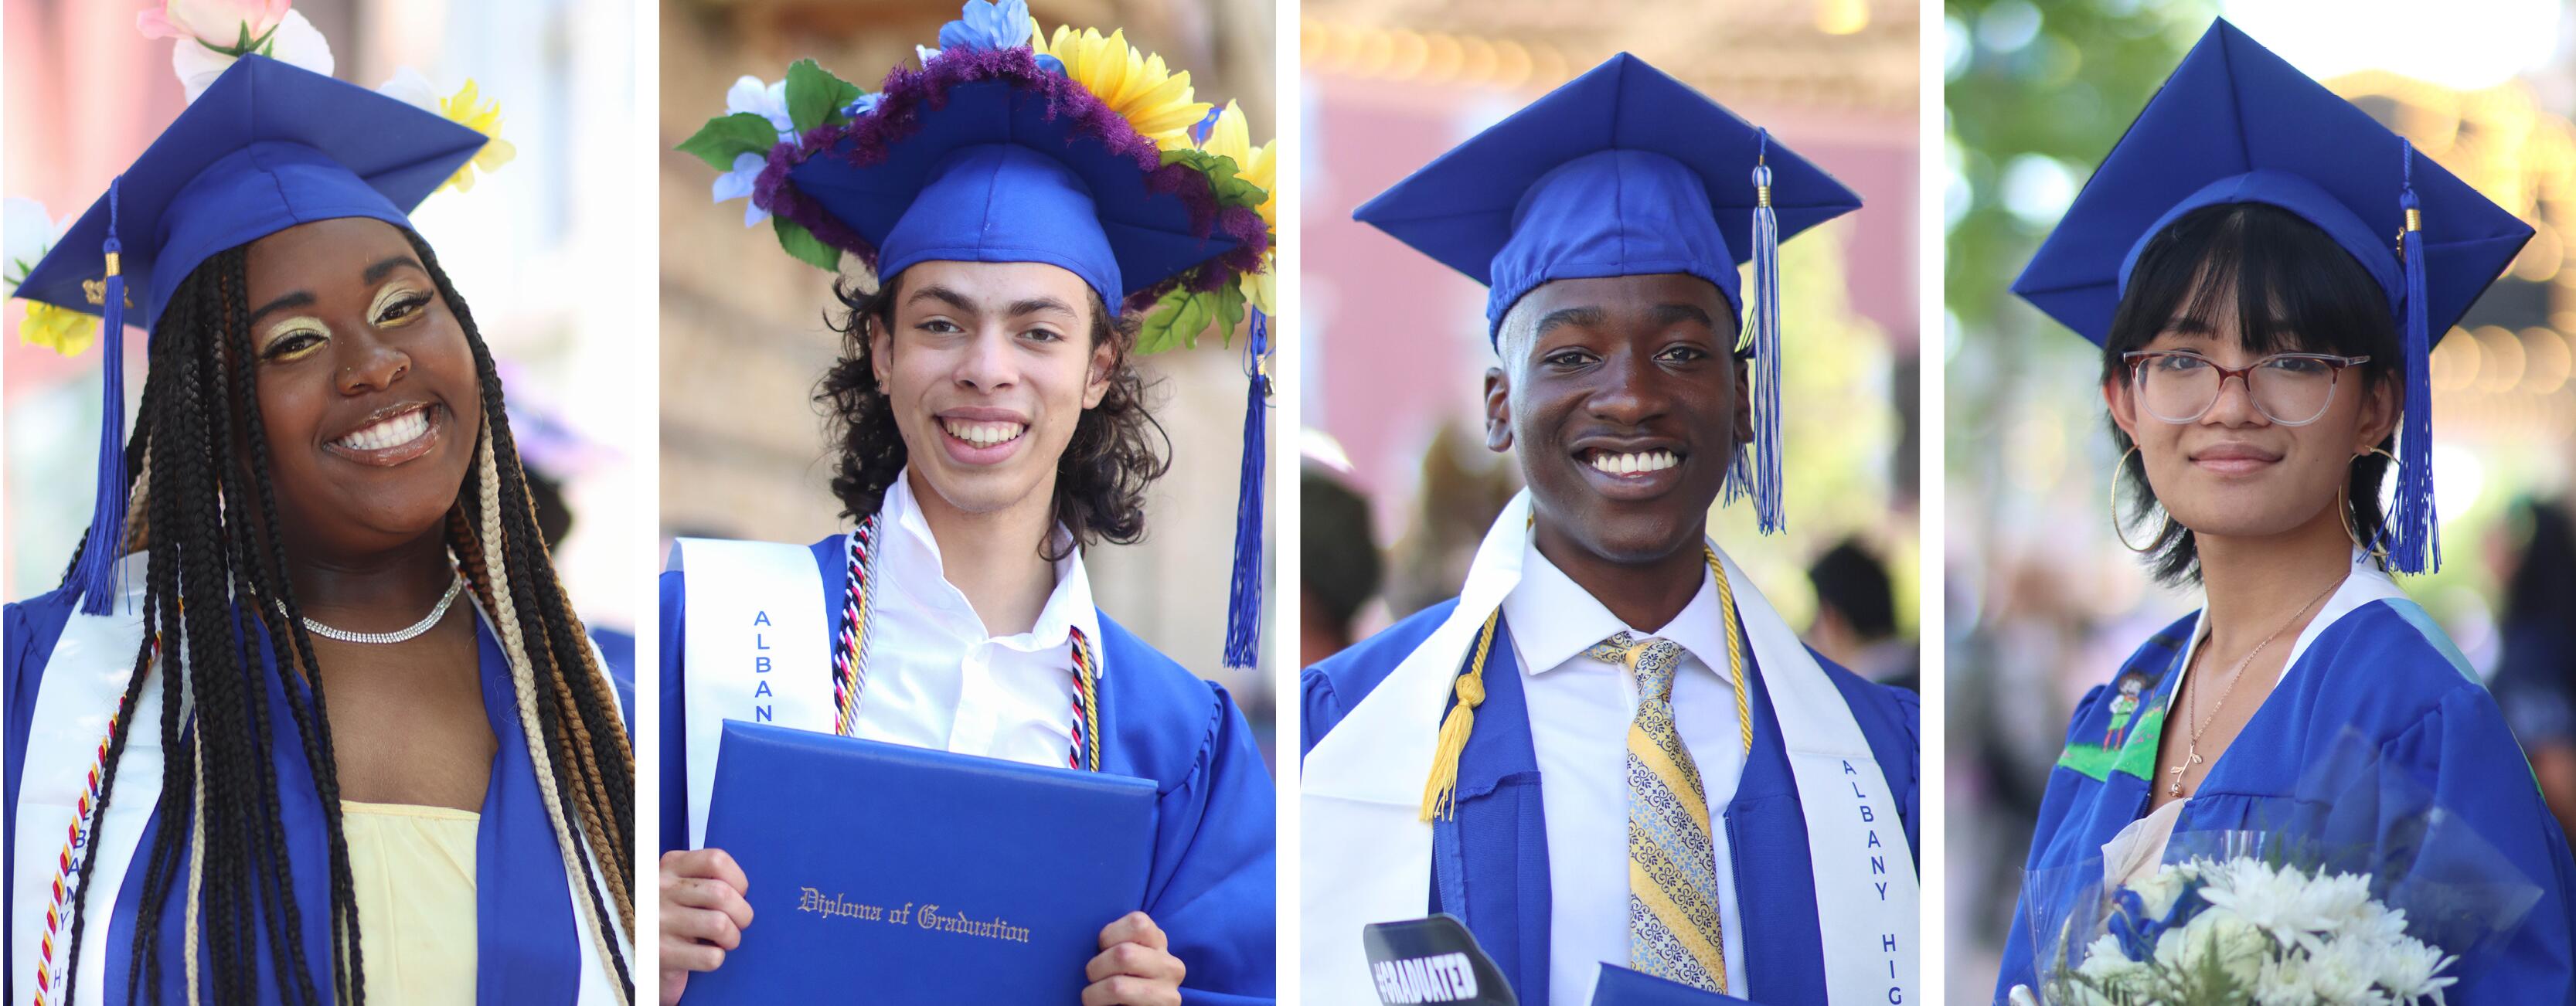 Graduates smiling and holding their diplomas